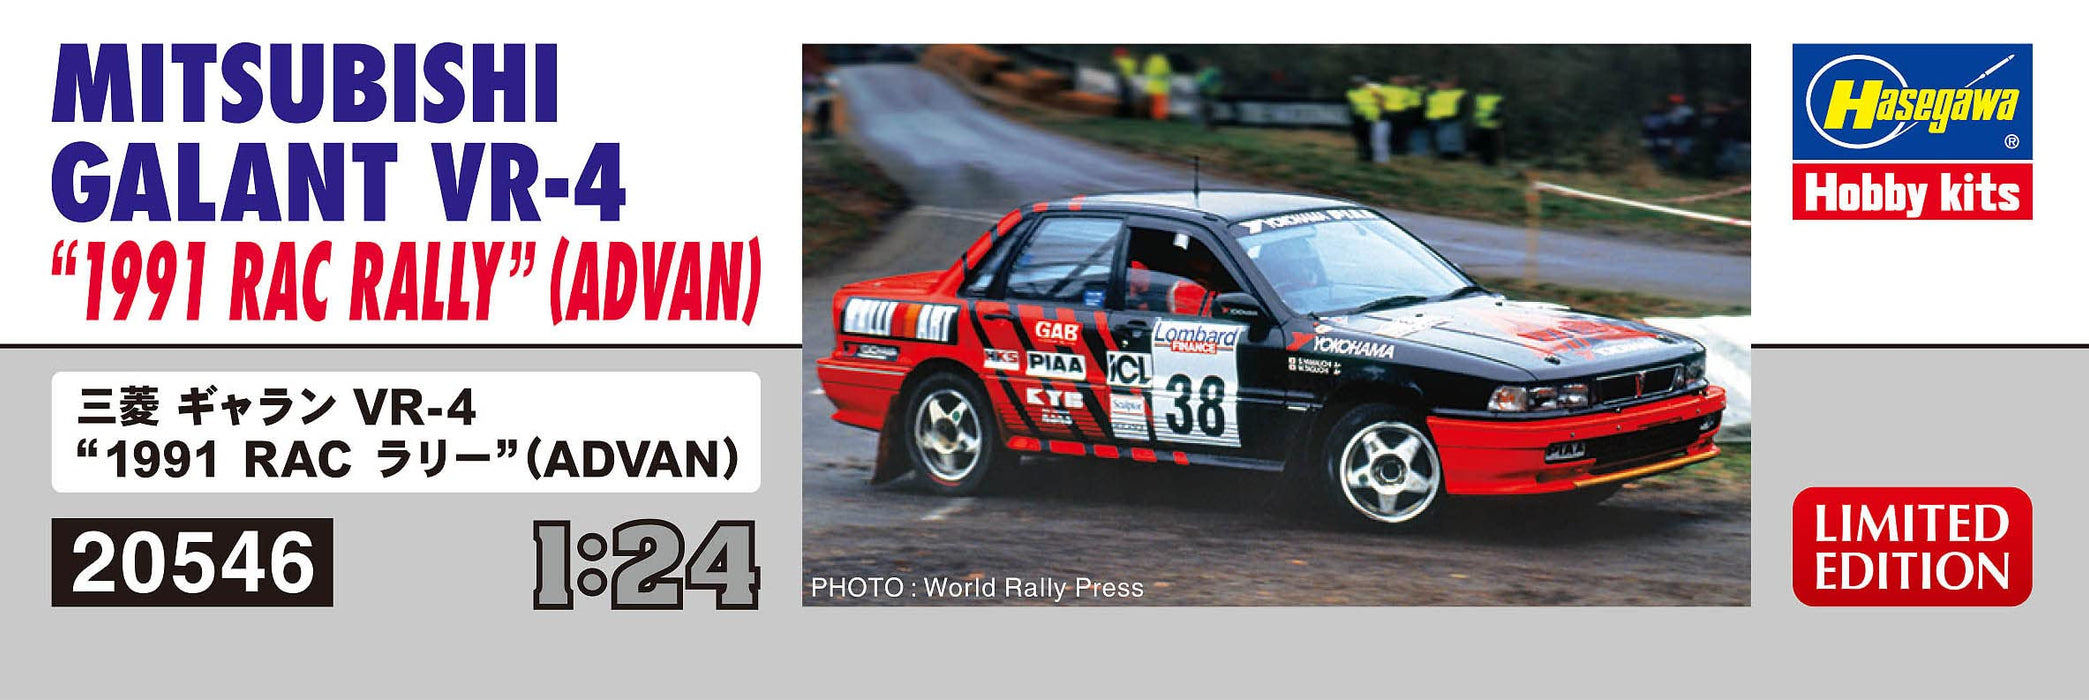 HASEGAWA 1/24 Mitsubishi Galant Vr-4 1991 Rac Rally Advan Kunststoffmodell